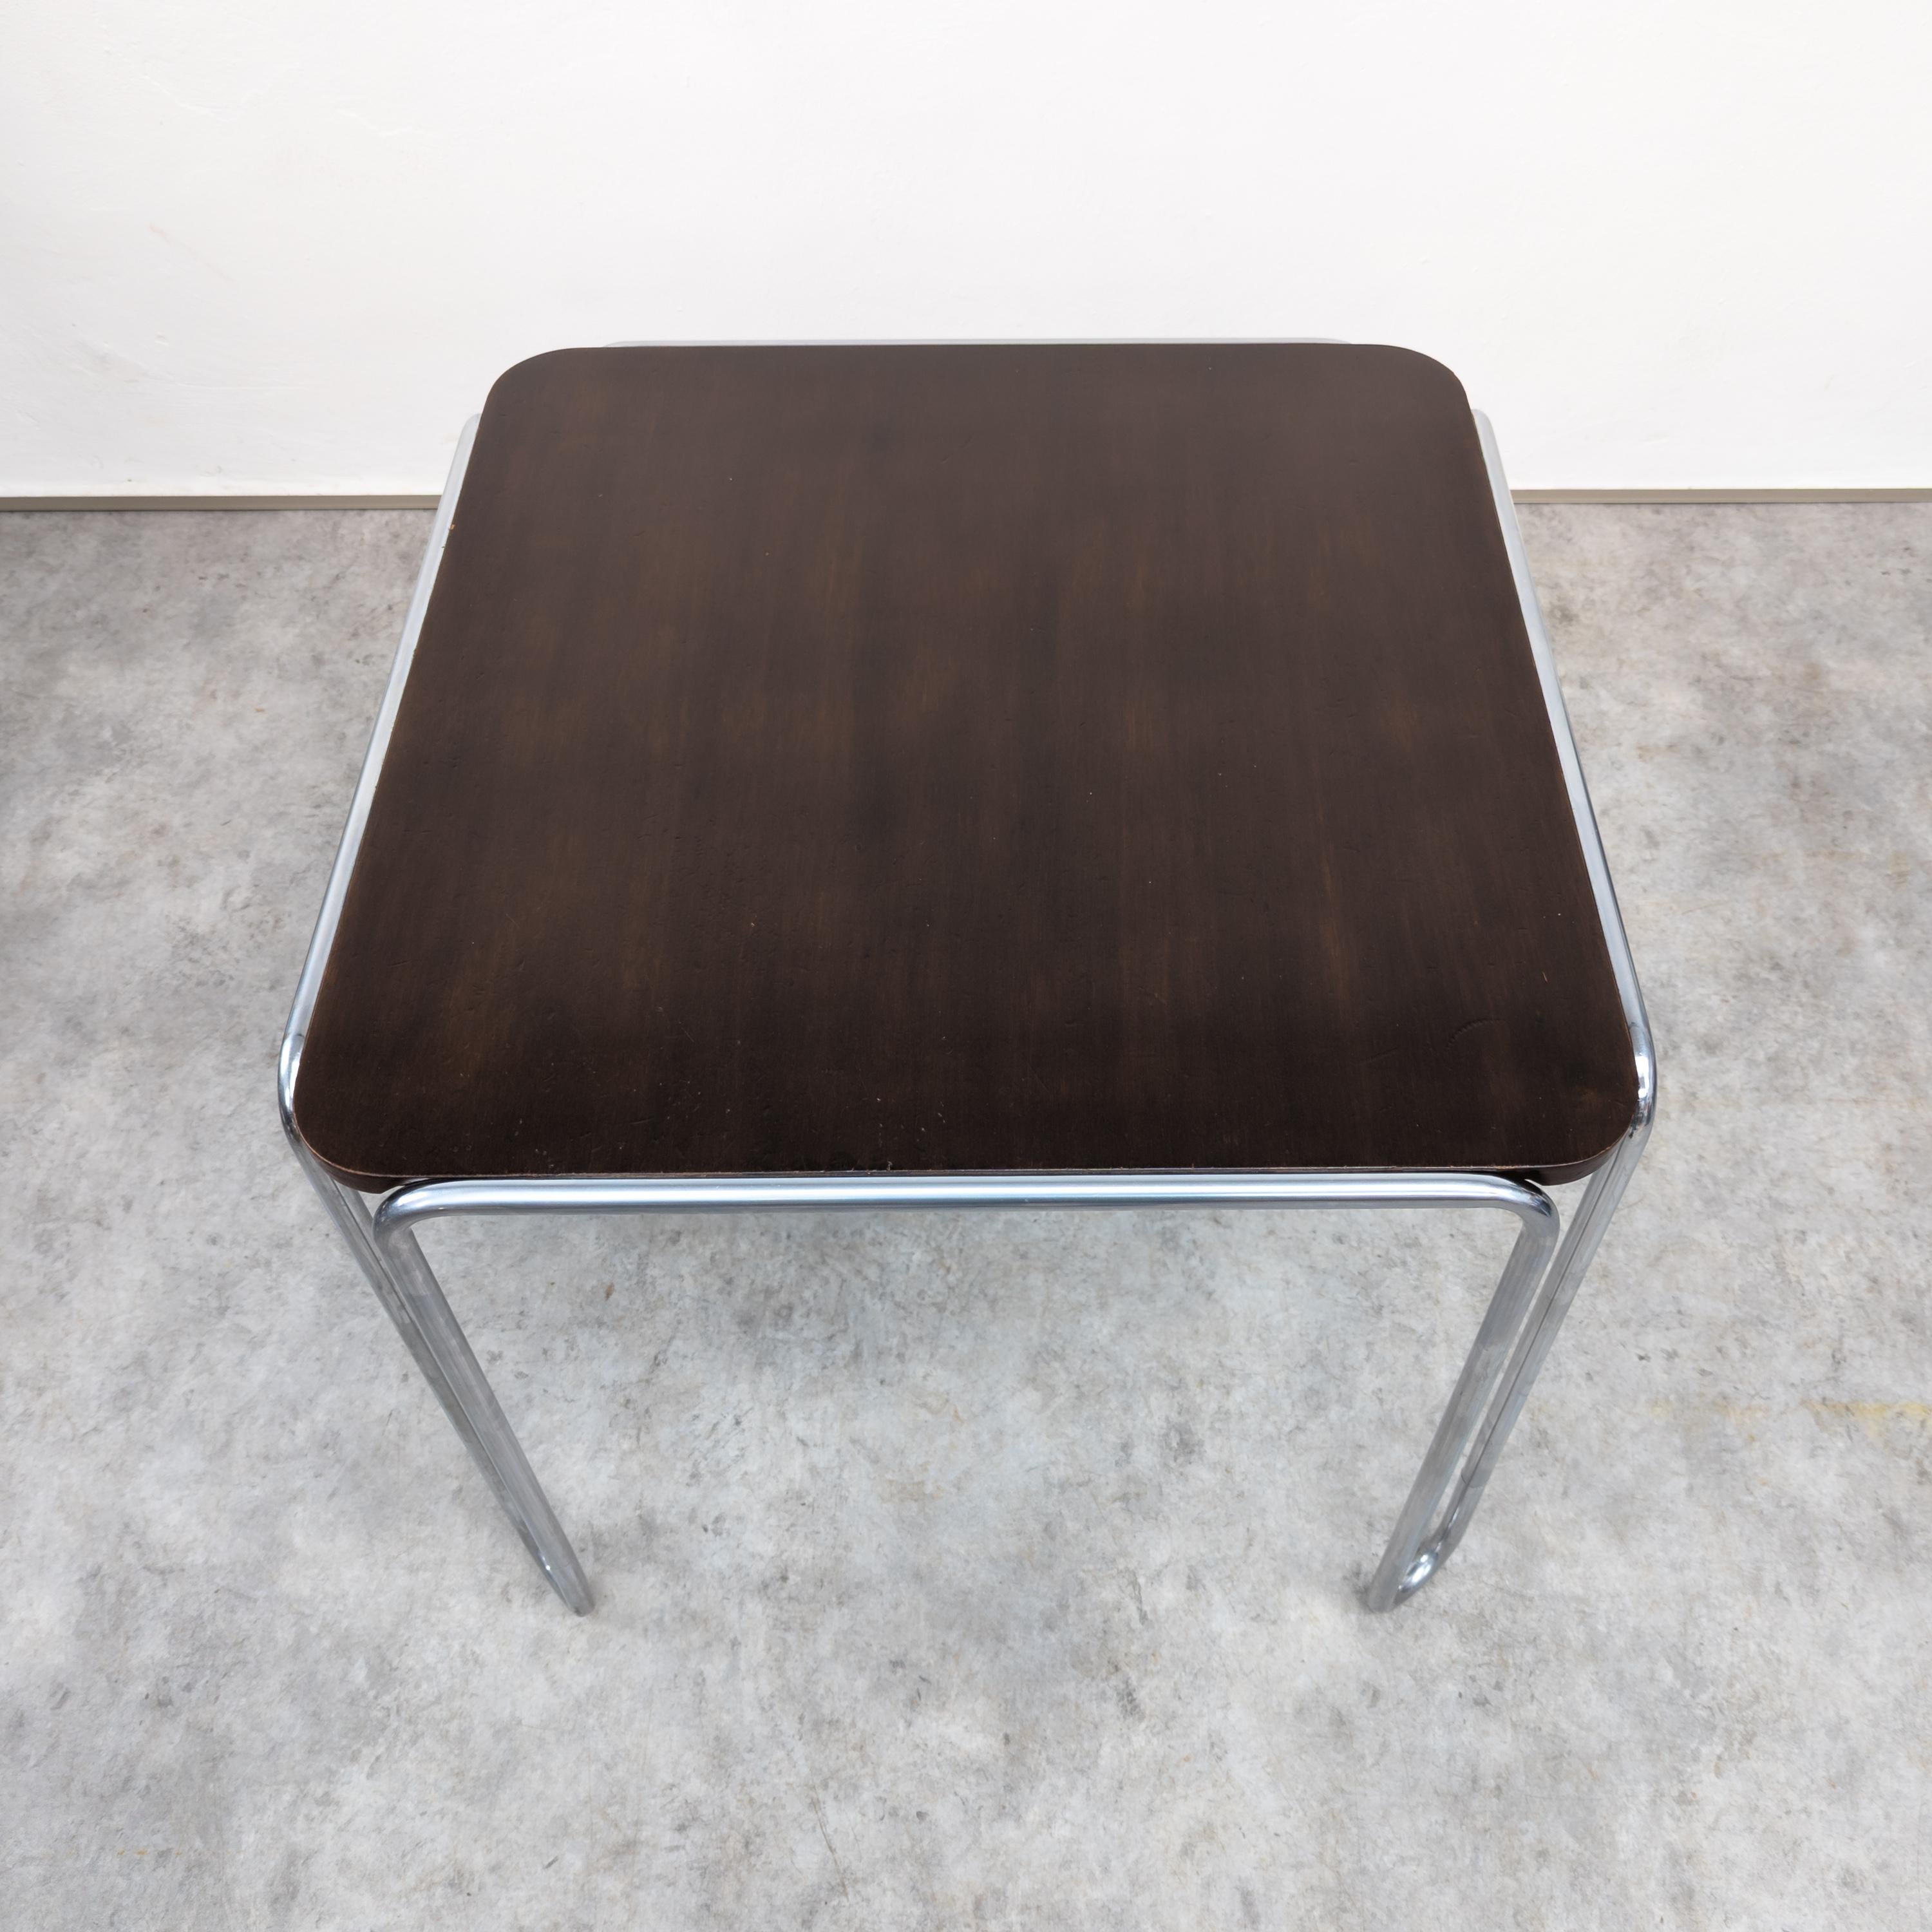 Thonet B 10 tubular steel table by Marcel Breuer  For Sale 1